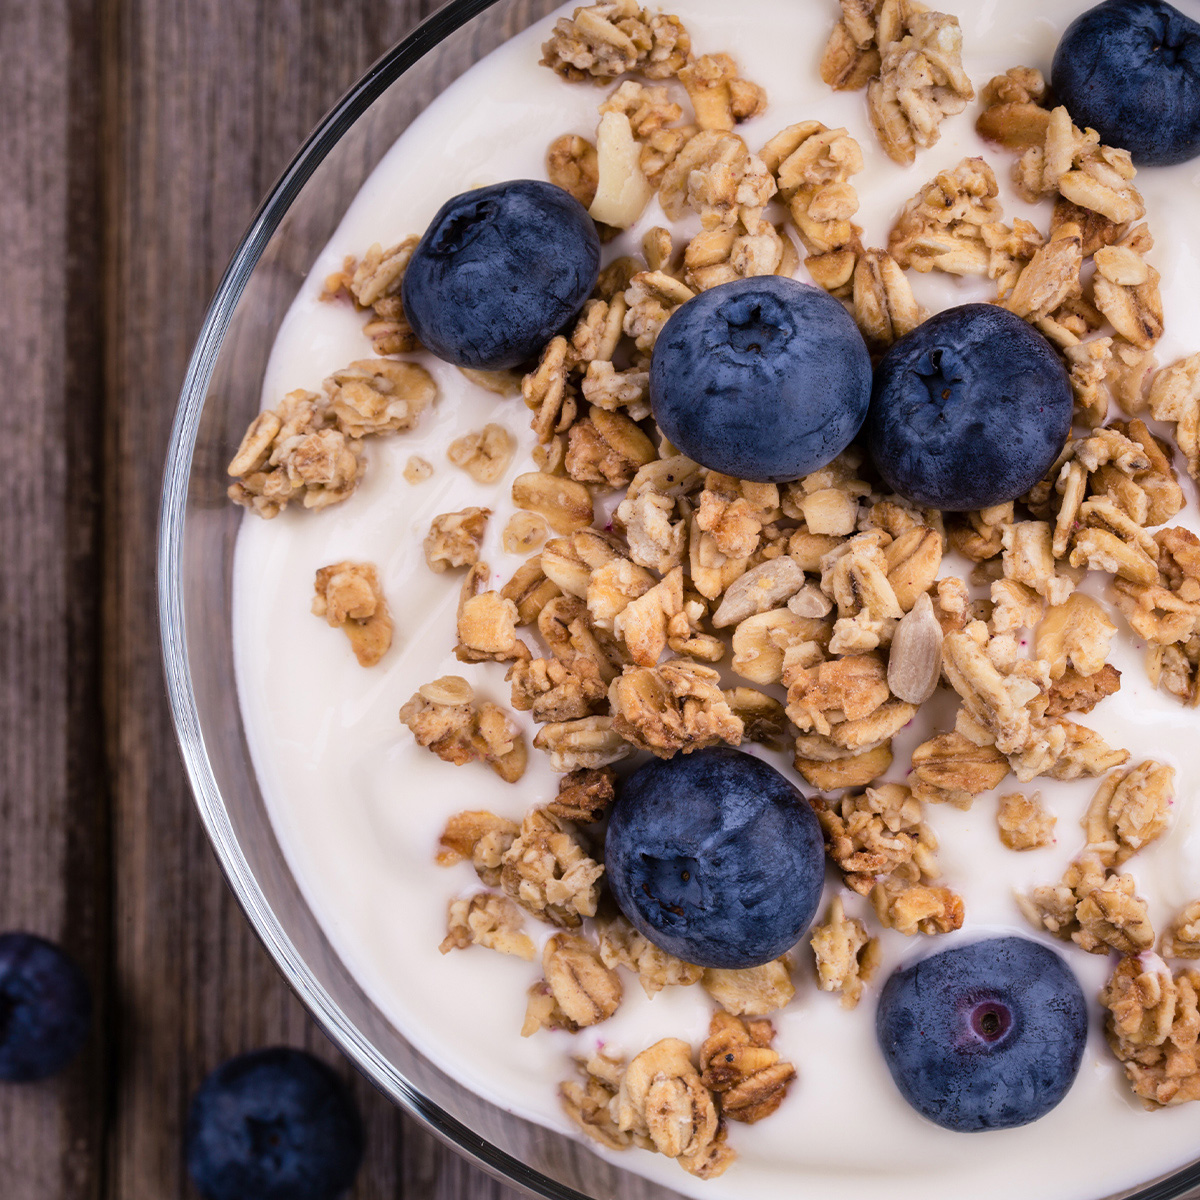 Yogurt with blueberries and granola